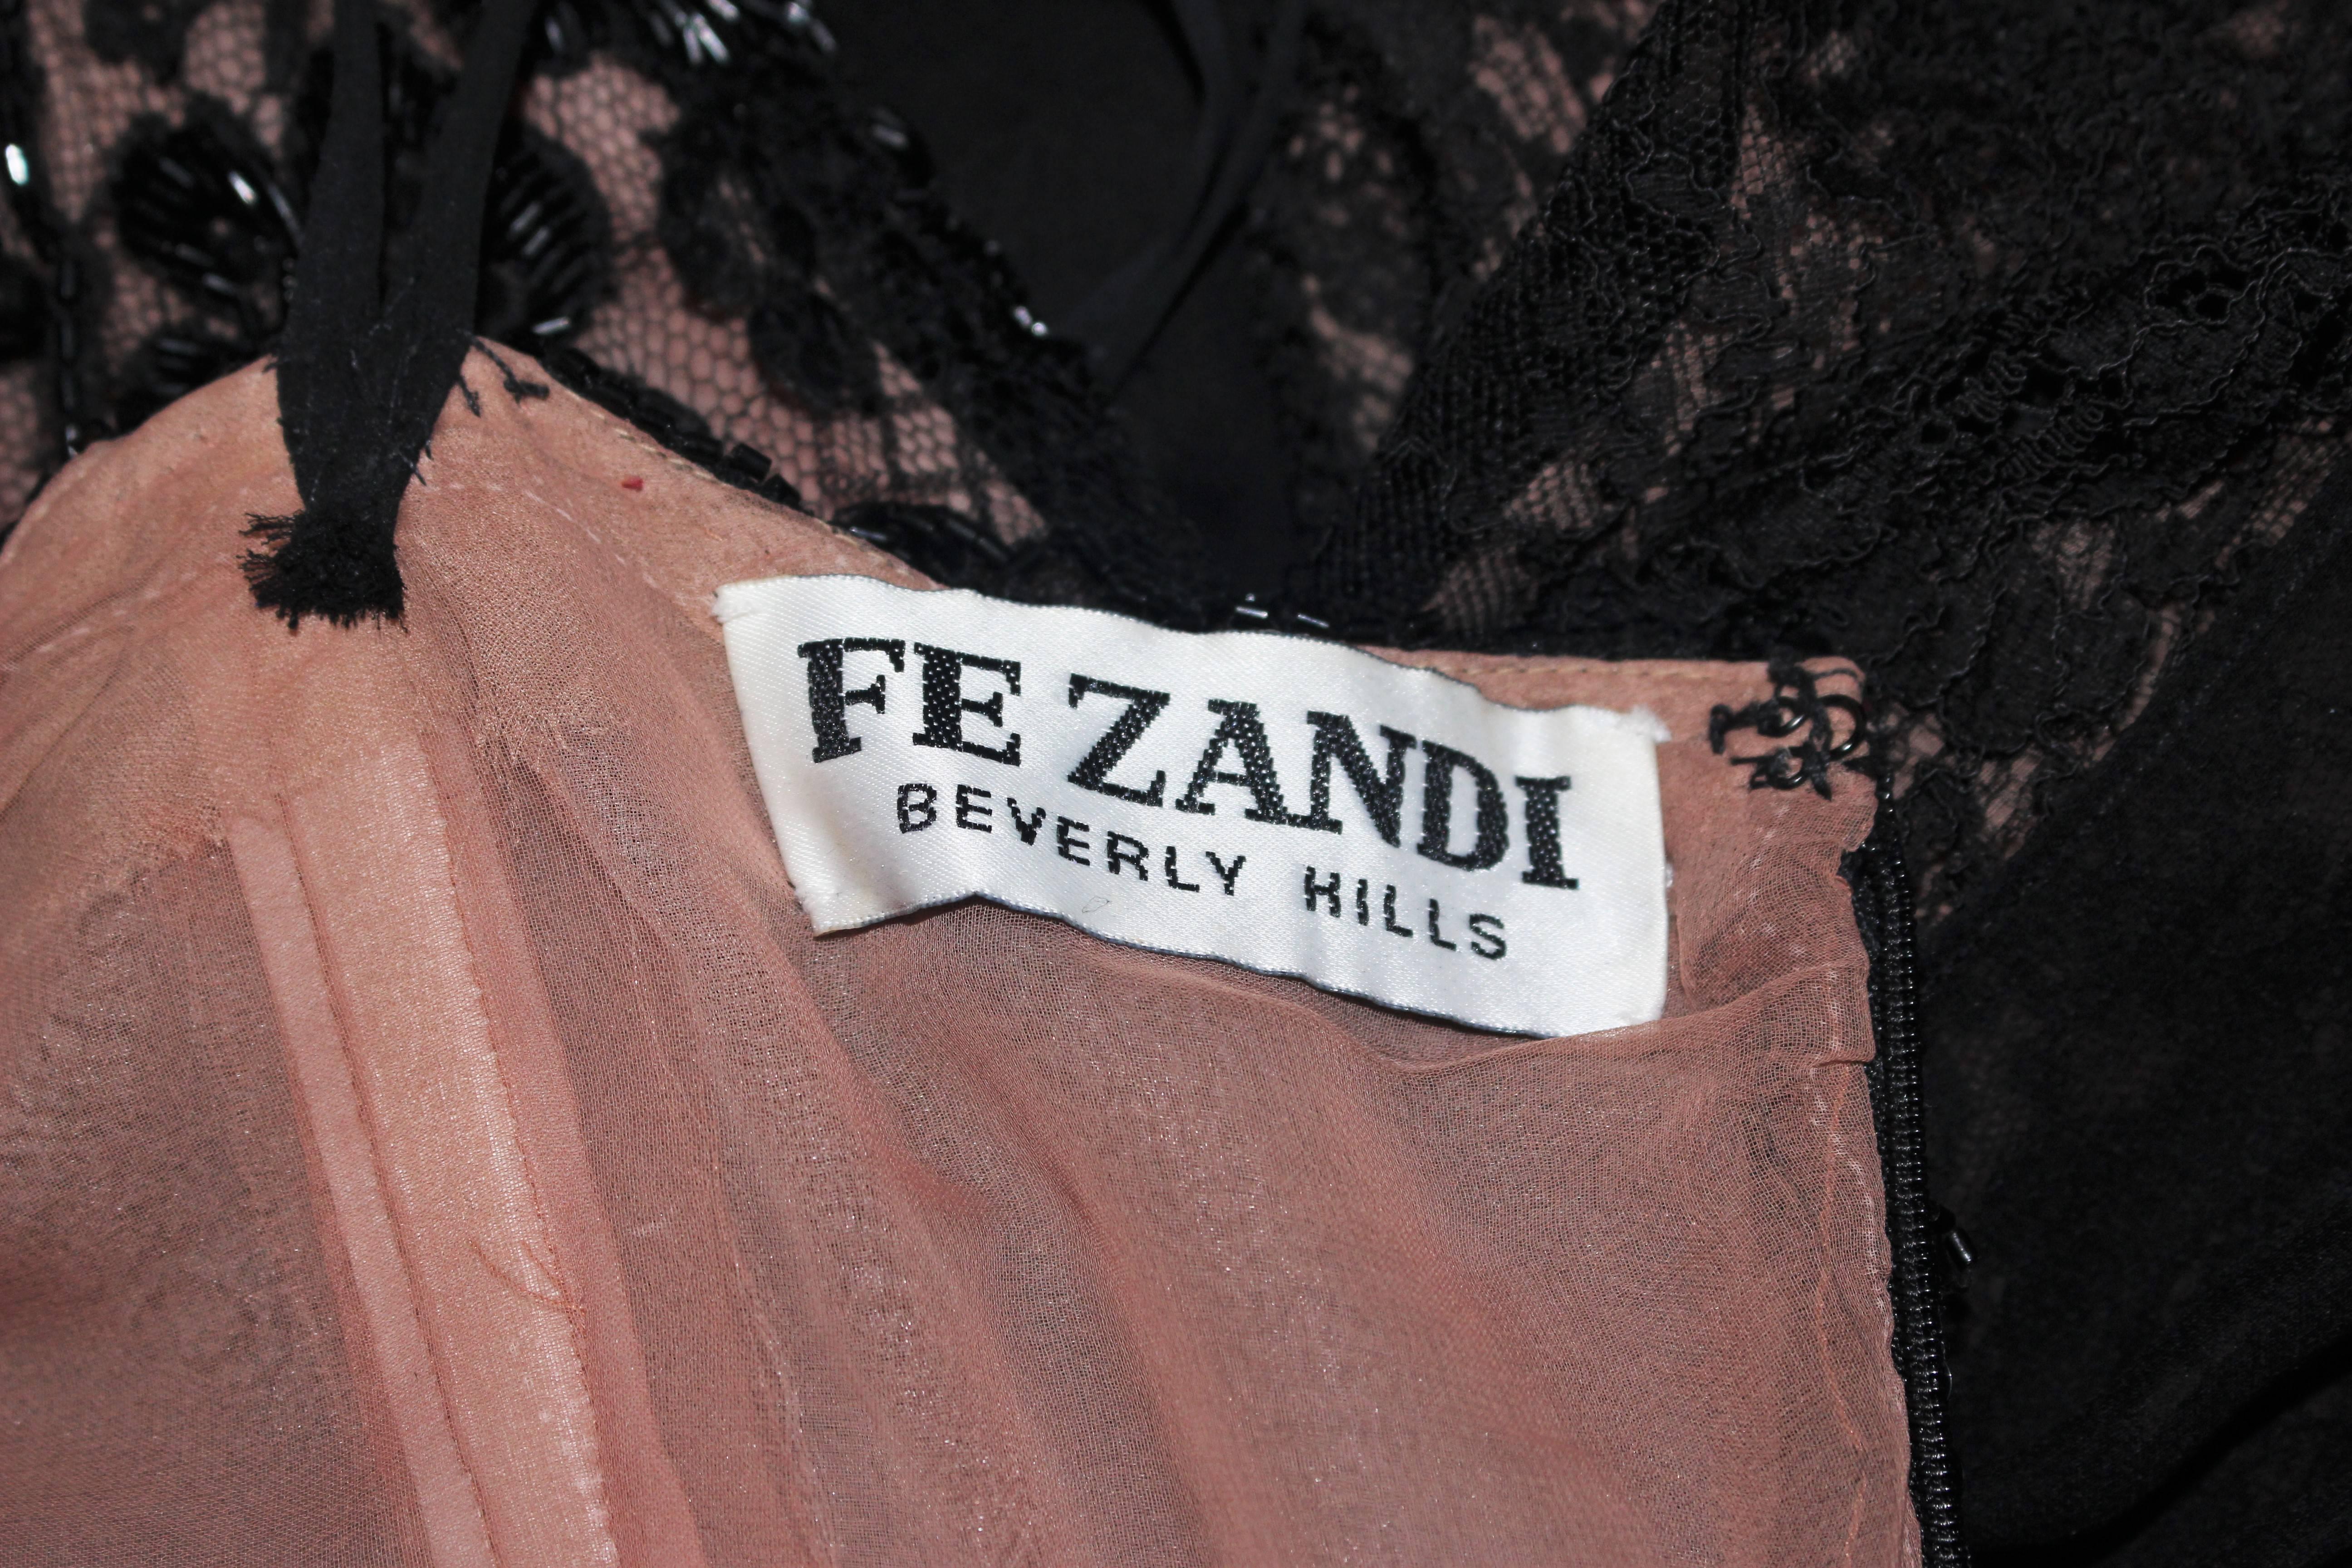 FE ZANDI Beverly Hills Beaded Black Lace Chiffon Gown Size 4 6 For Sale 5